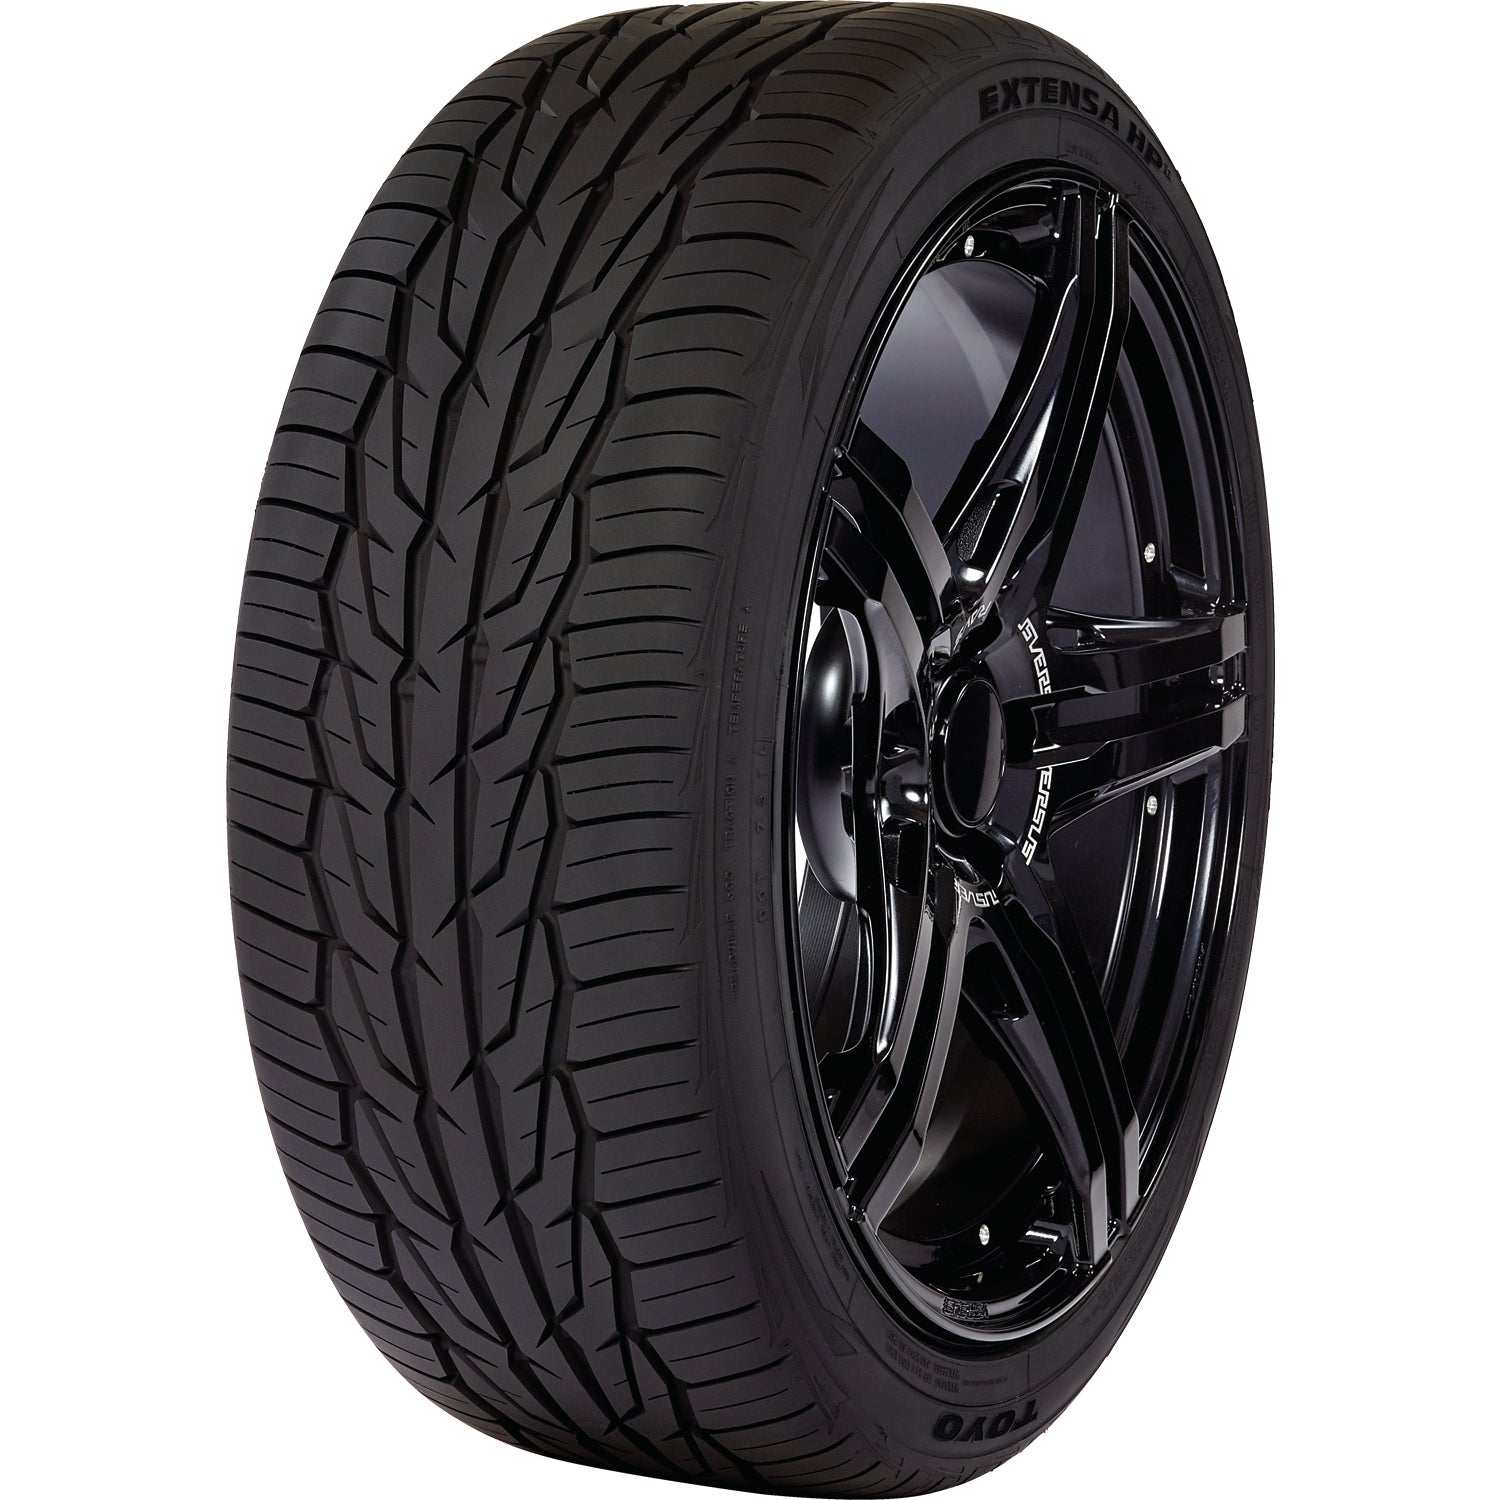 TOYO TIRES EXTENSA HP II 235/55R18 (28.1X9.3R 18) Tires